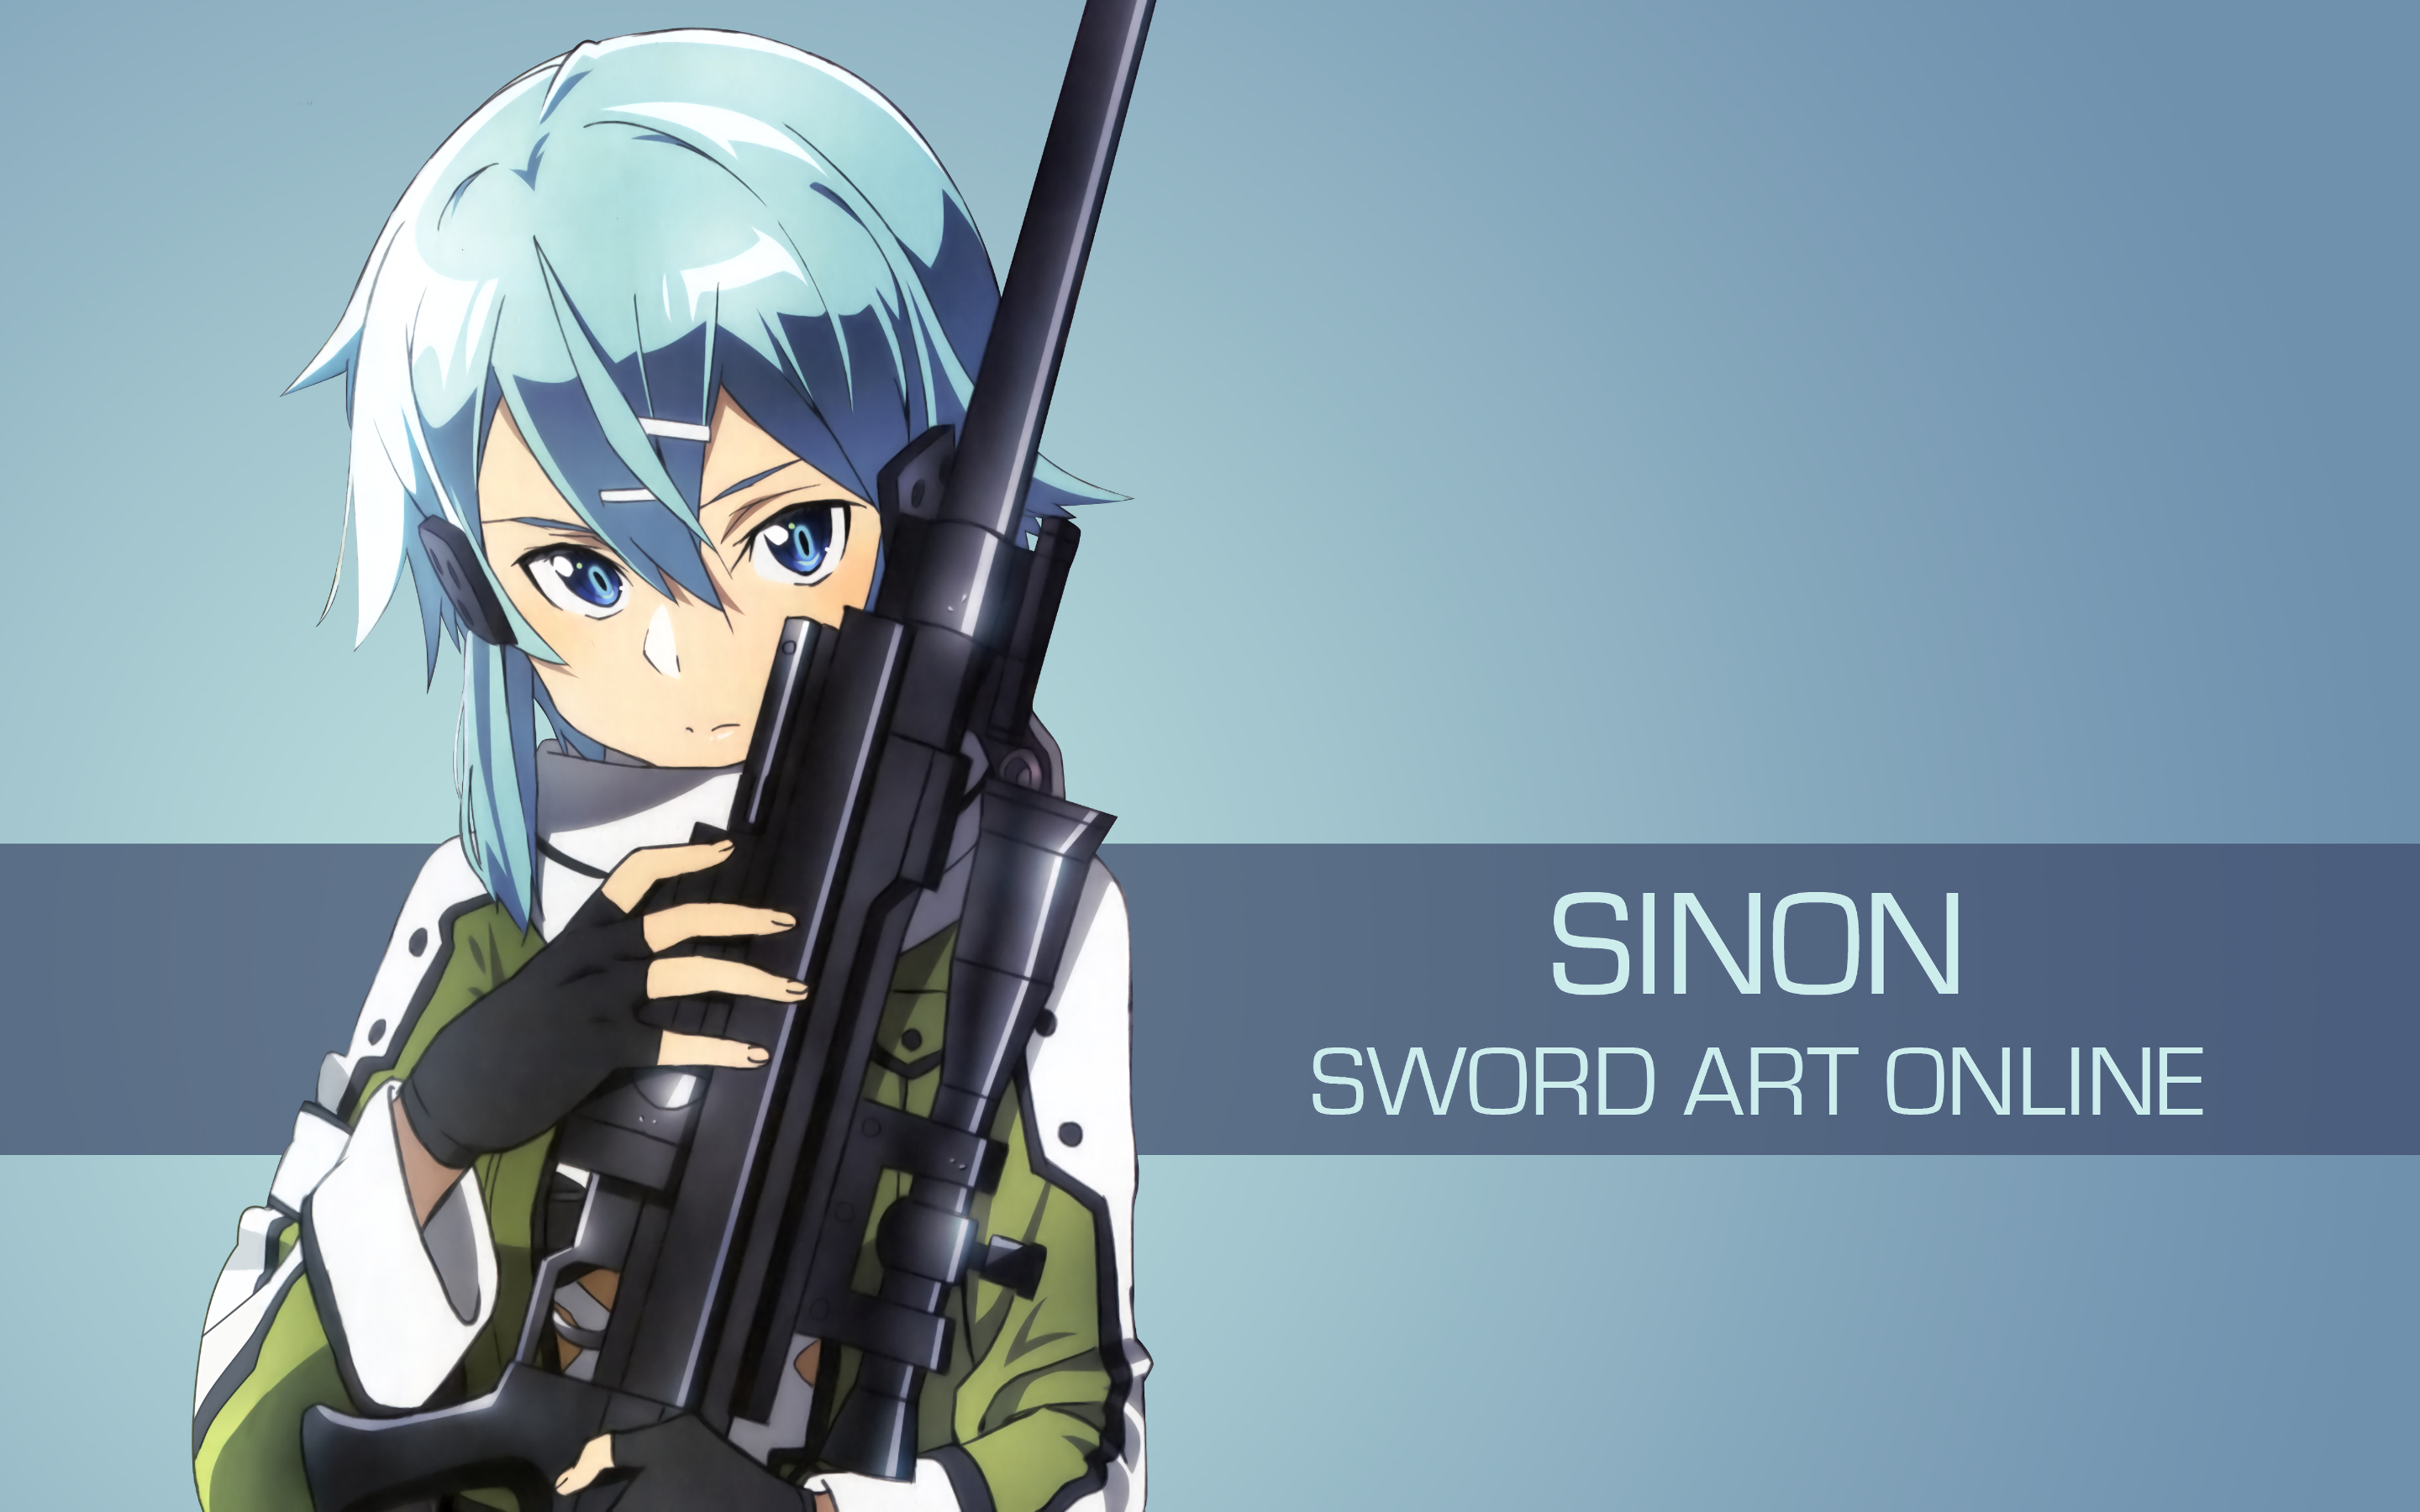 Sword Art Online-Sinon 2 by spectralfire234 on DeviantArt